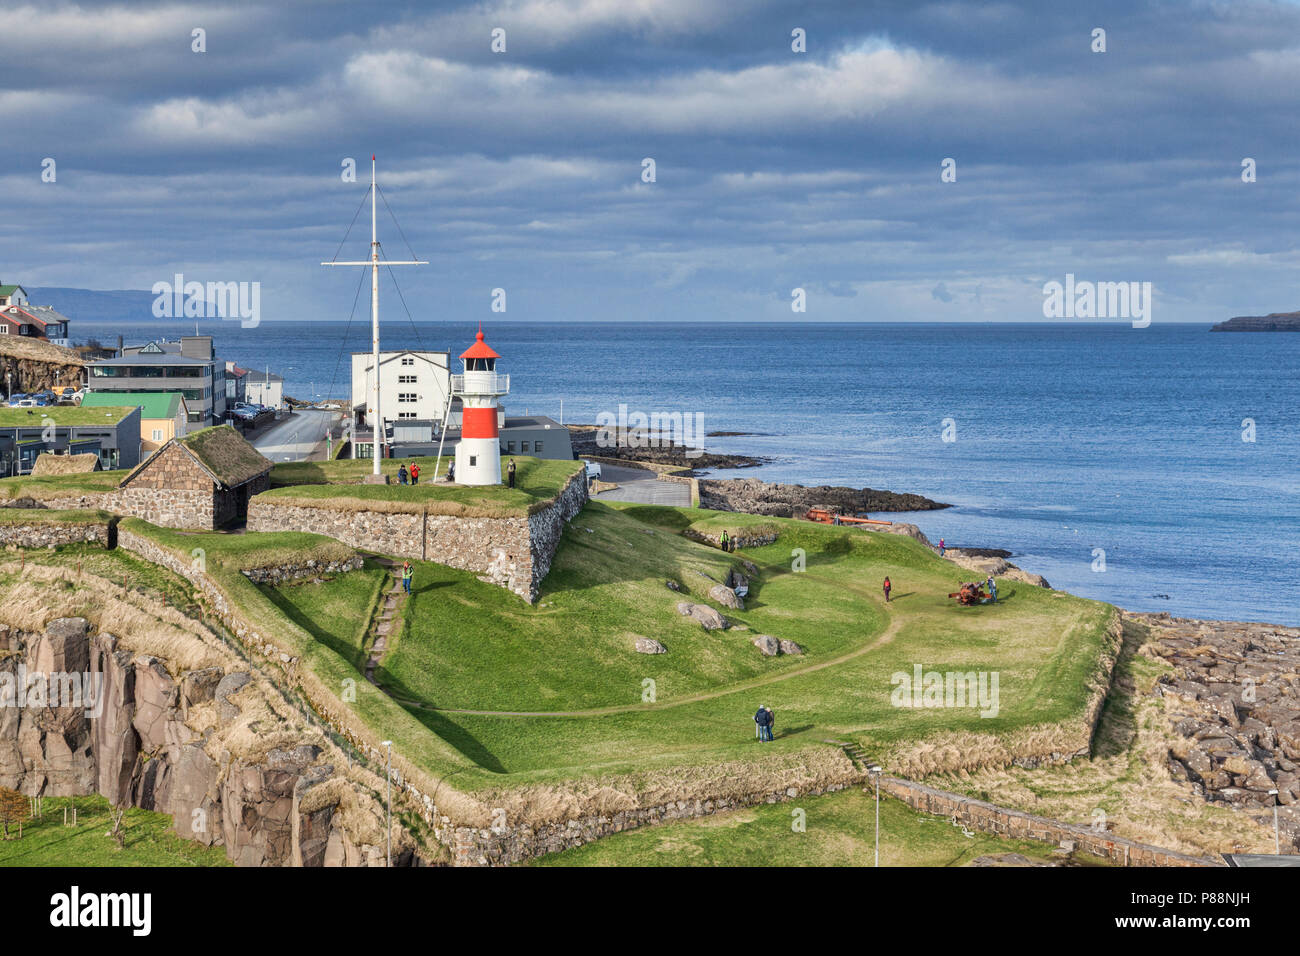 26 Aprile 2018: Torshavn Isole Faroe - Skansin storica fortezza e faro. Foto Stock